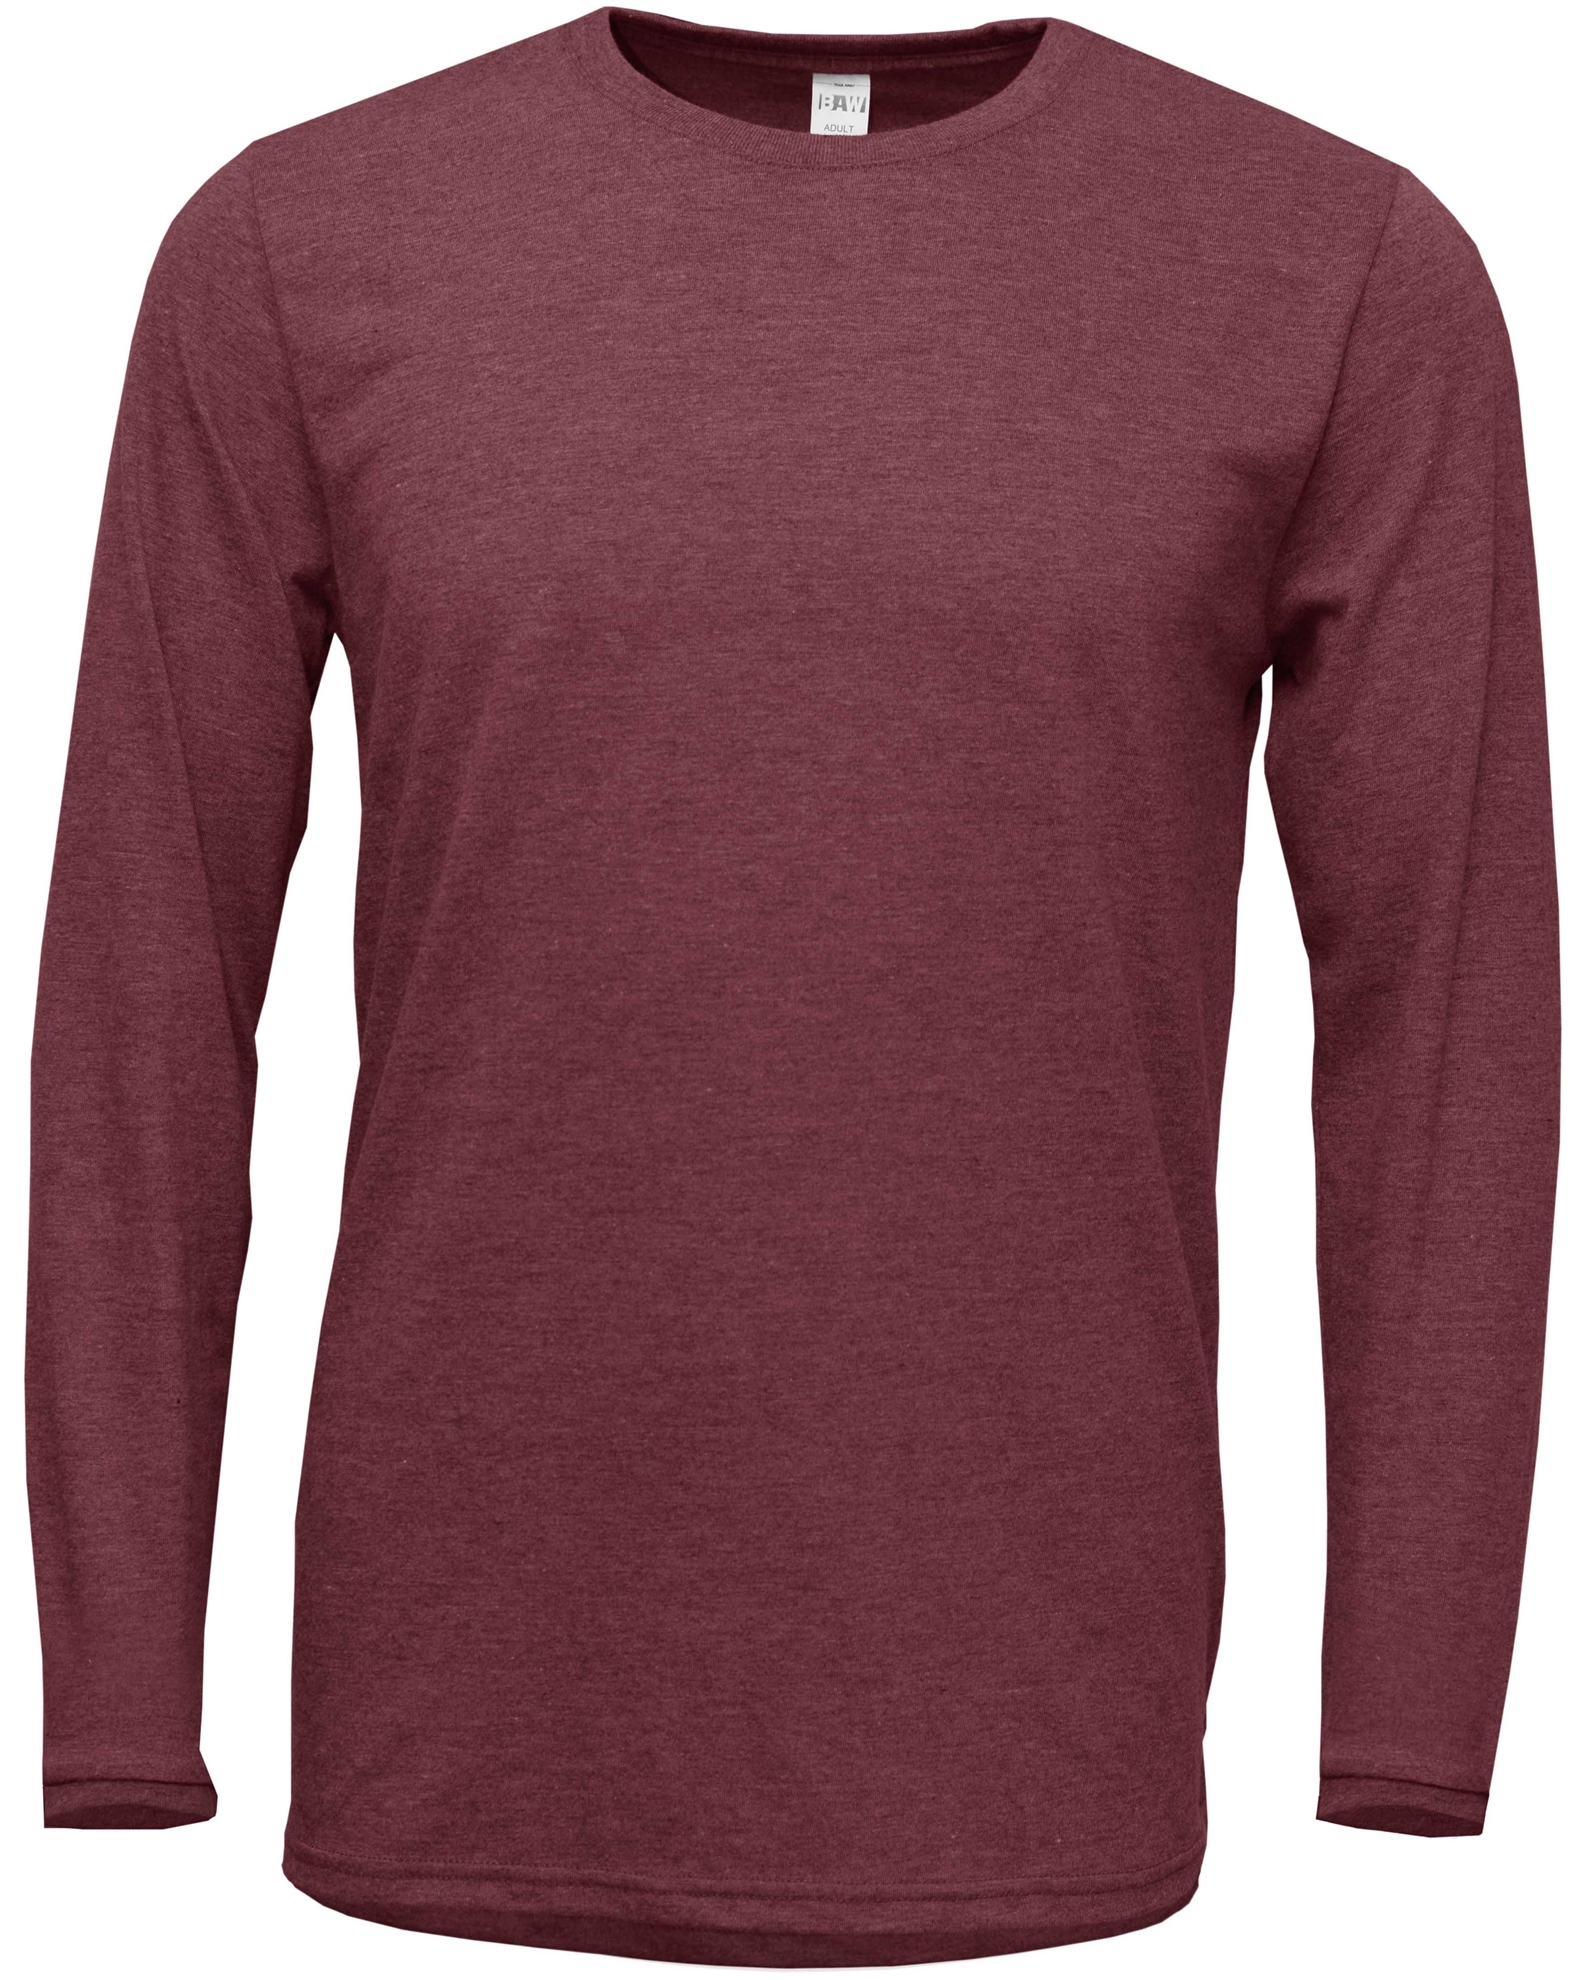 BAW Athletic Wear PC196 - Adult Soft-Tek Blend Long Sleeve Shirt